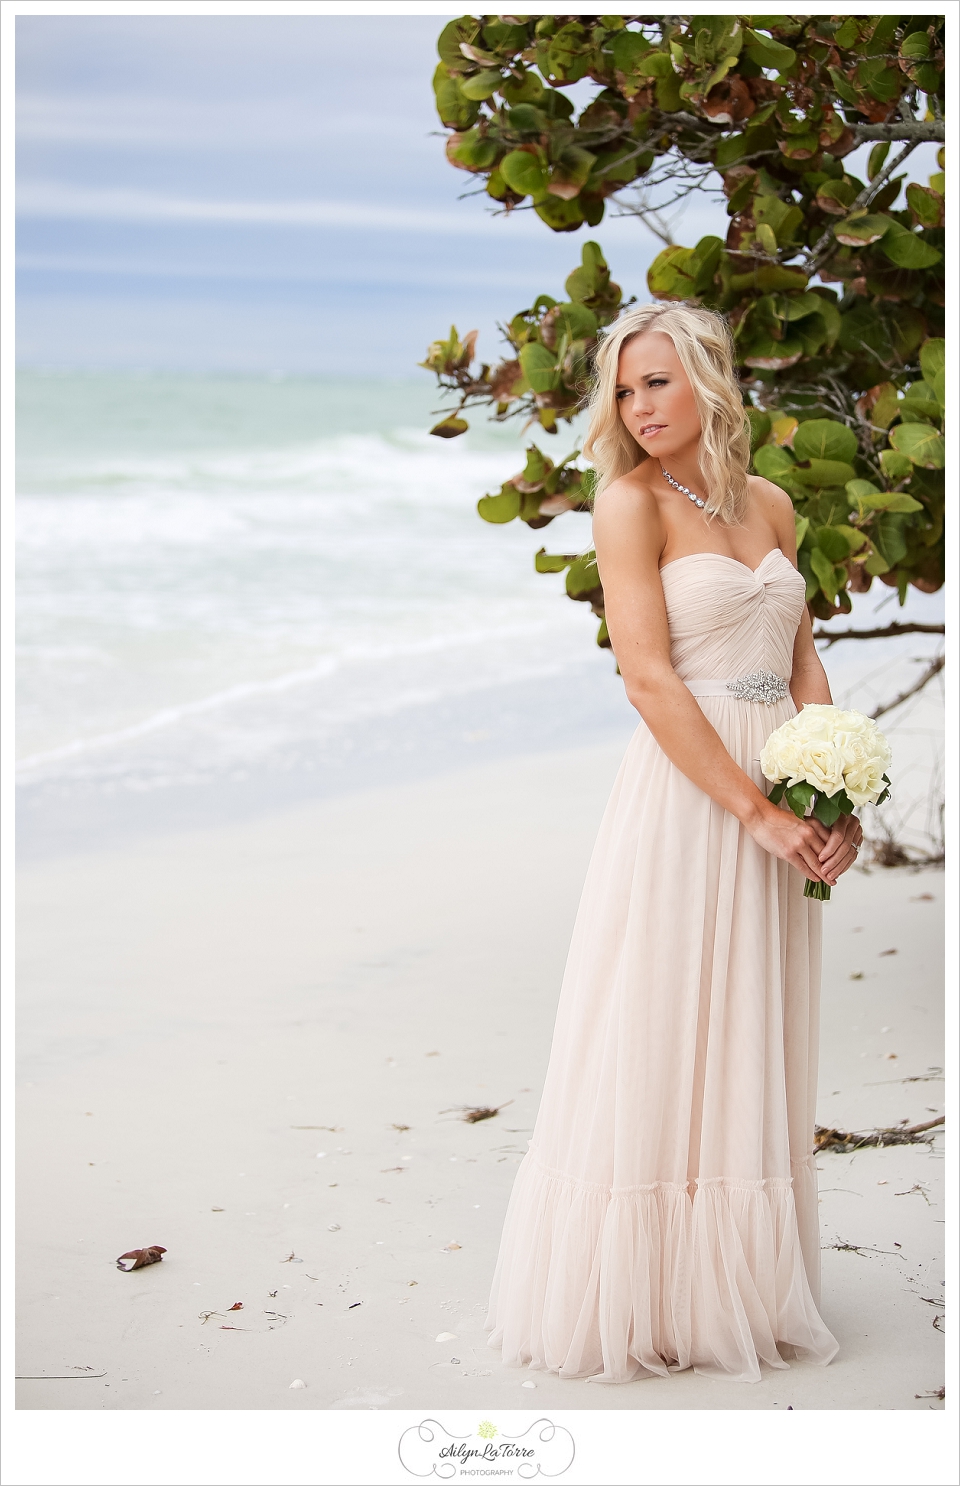 Sarasota Wedding photographer 6110 - © Ailyn La Torre Photography 2013-2